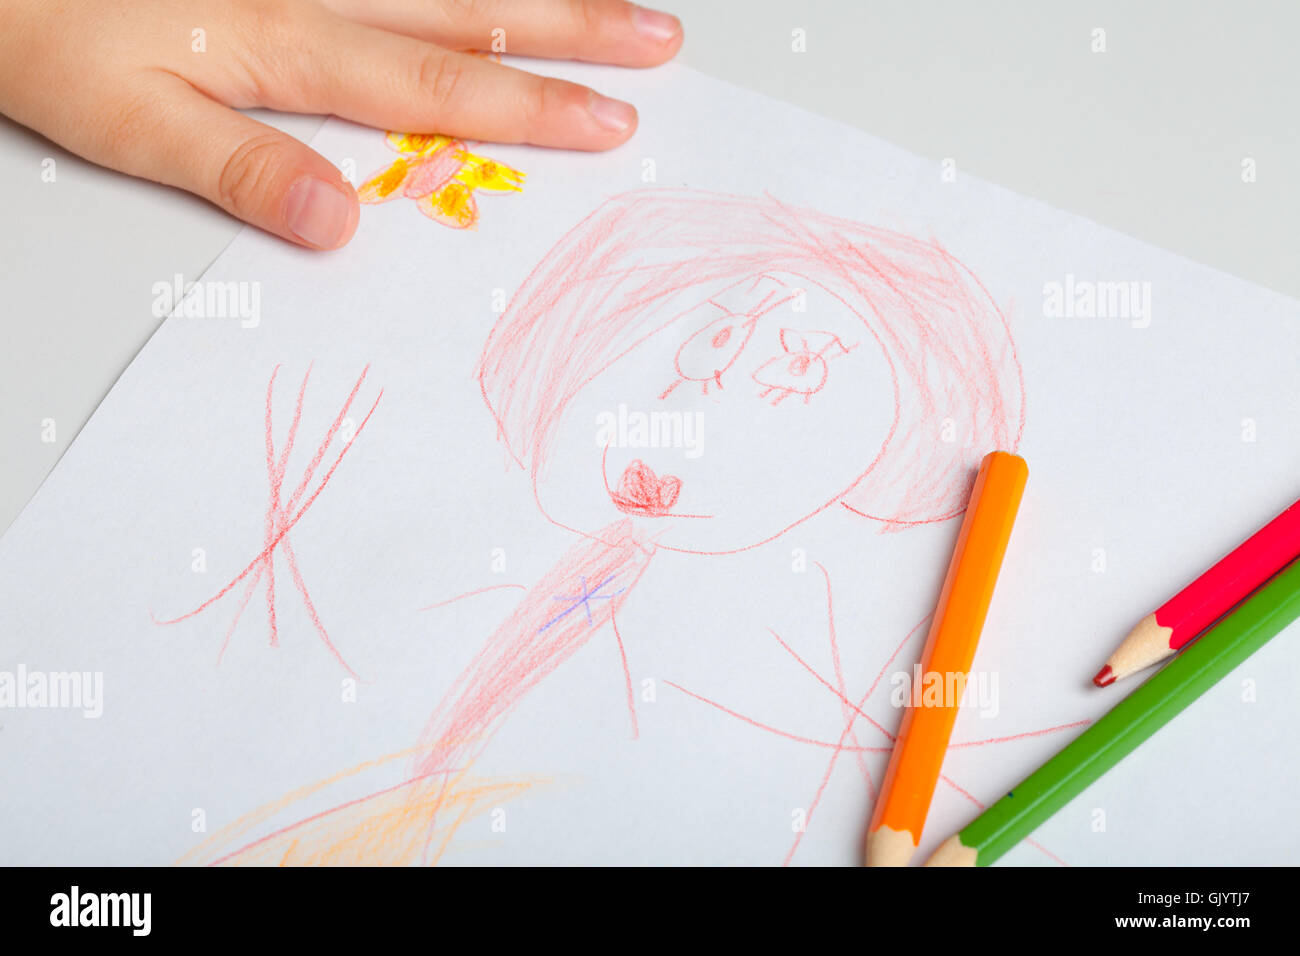 Дети рисуют карандашами на чистых листах